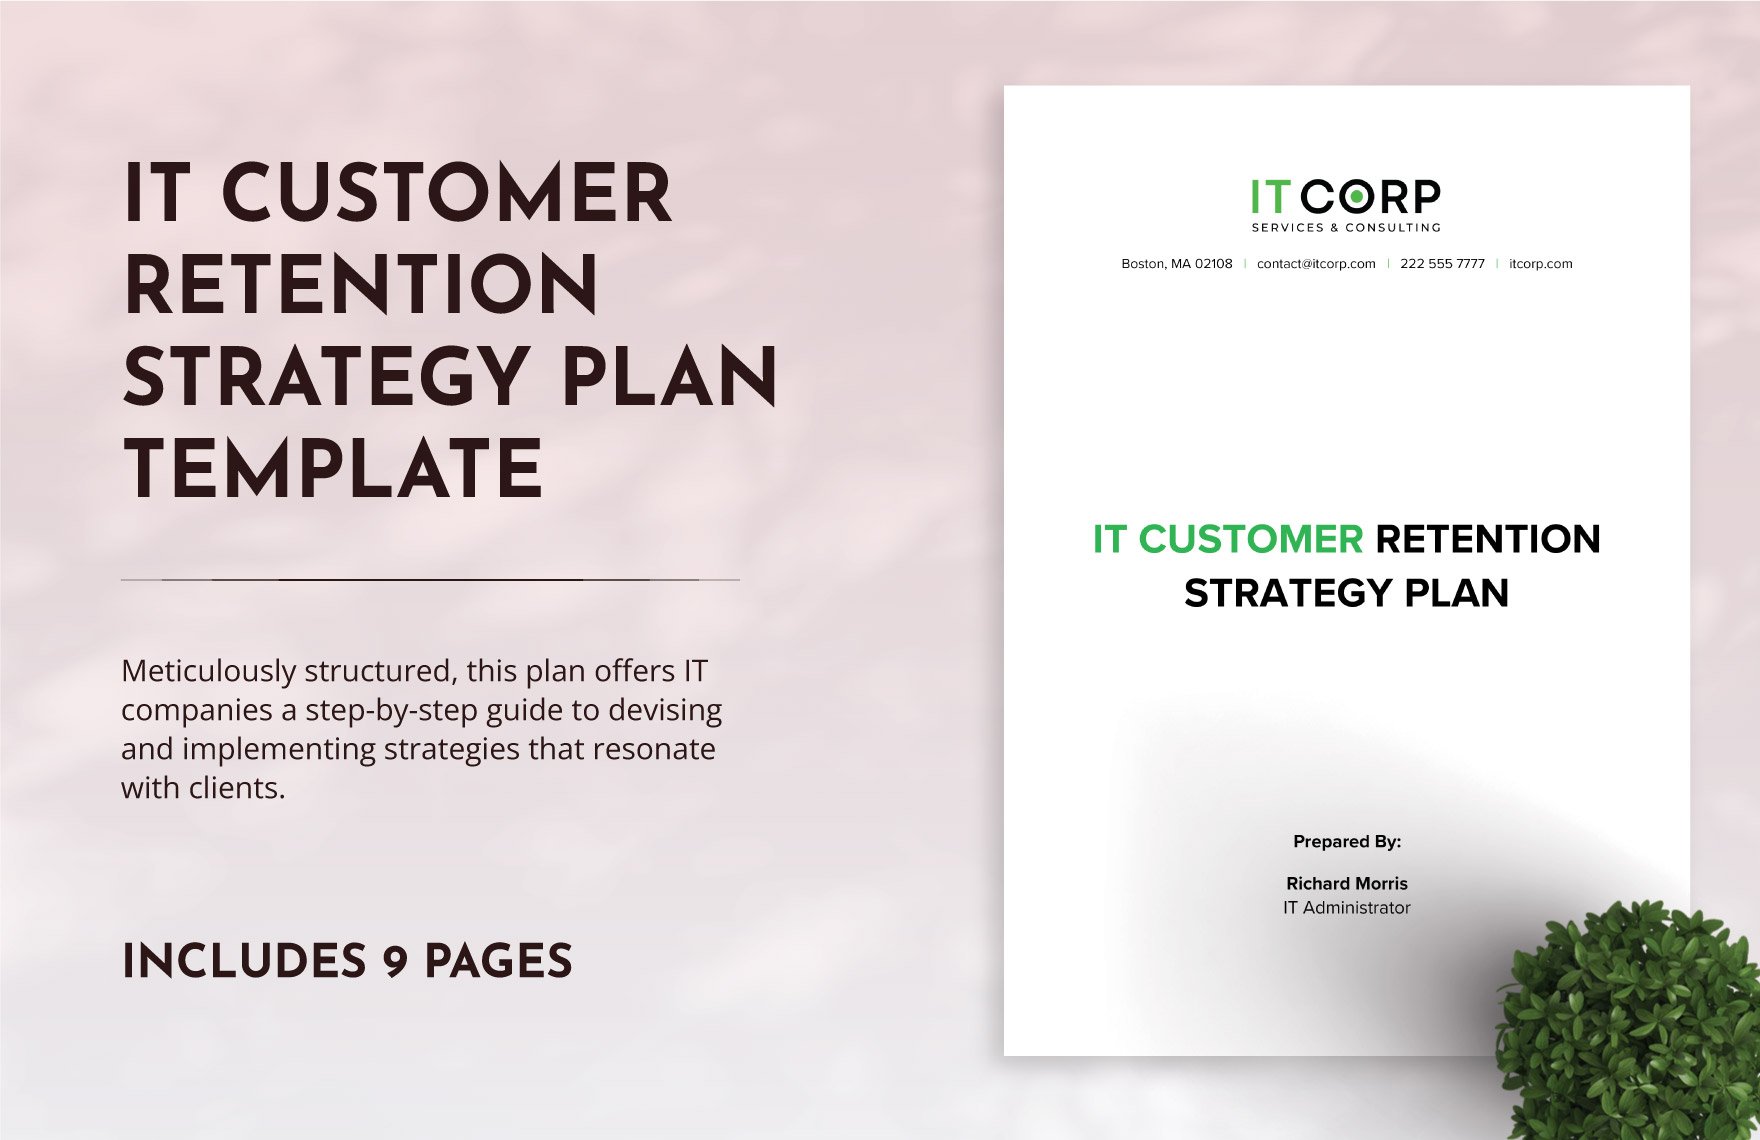 IT Customer Retention Strategy Plan Template